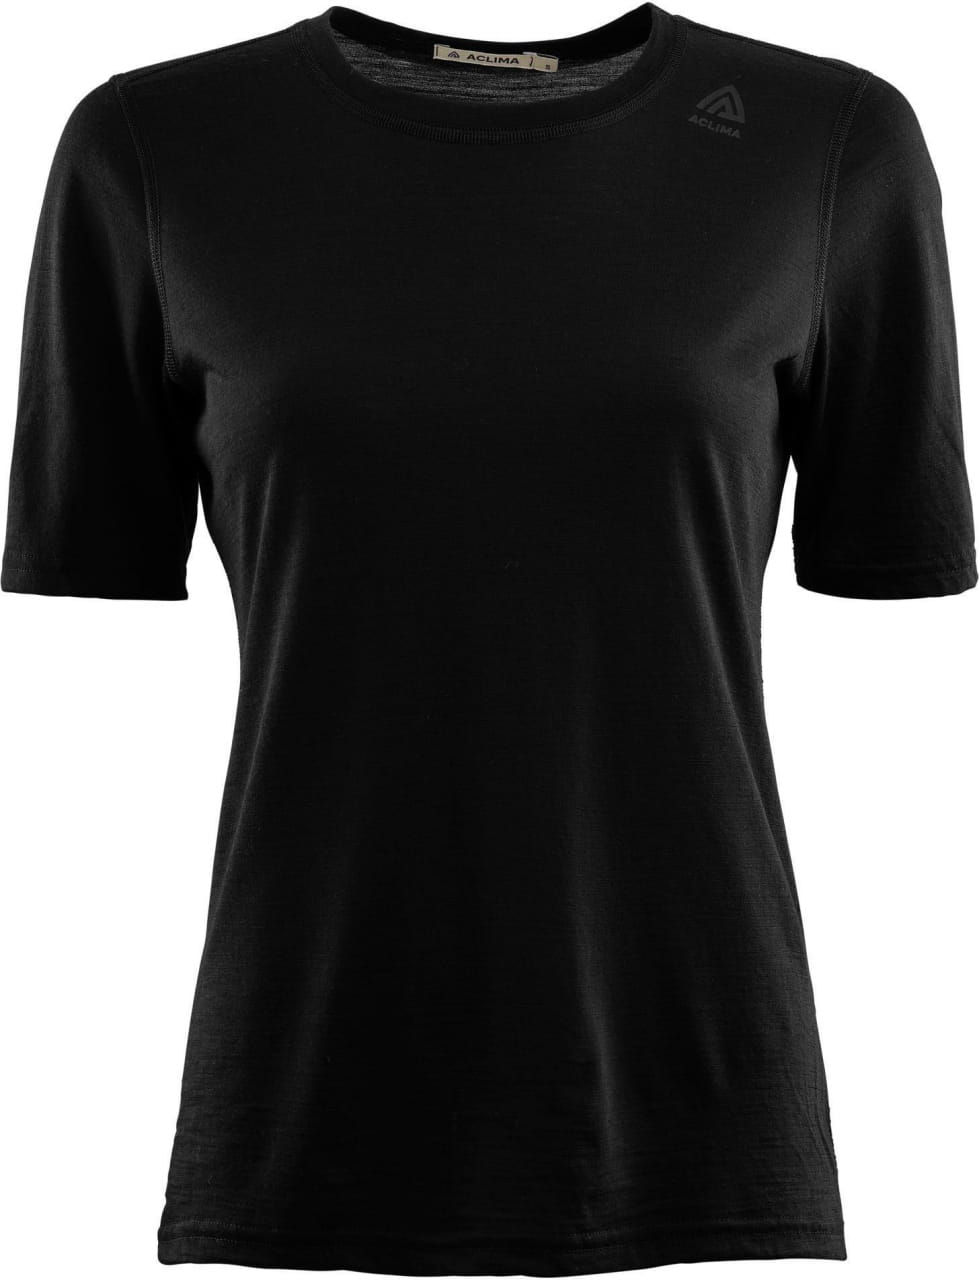 Camiseta deportiva de mujer Aclima LightWool Undershirt Tee